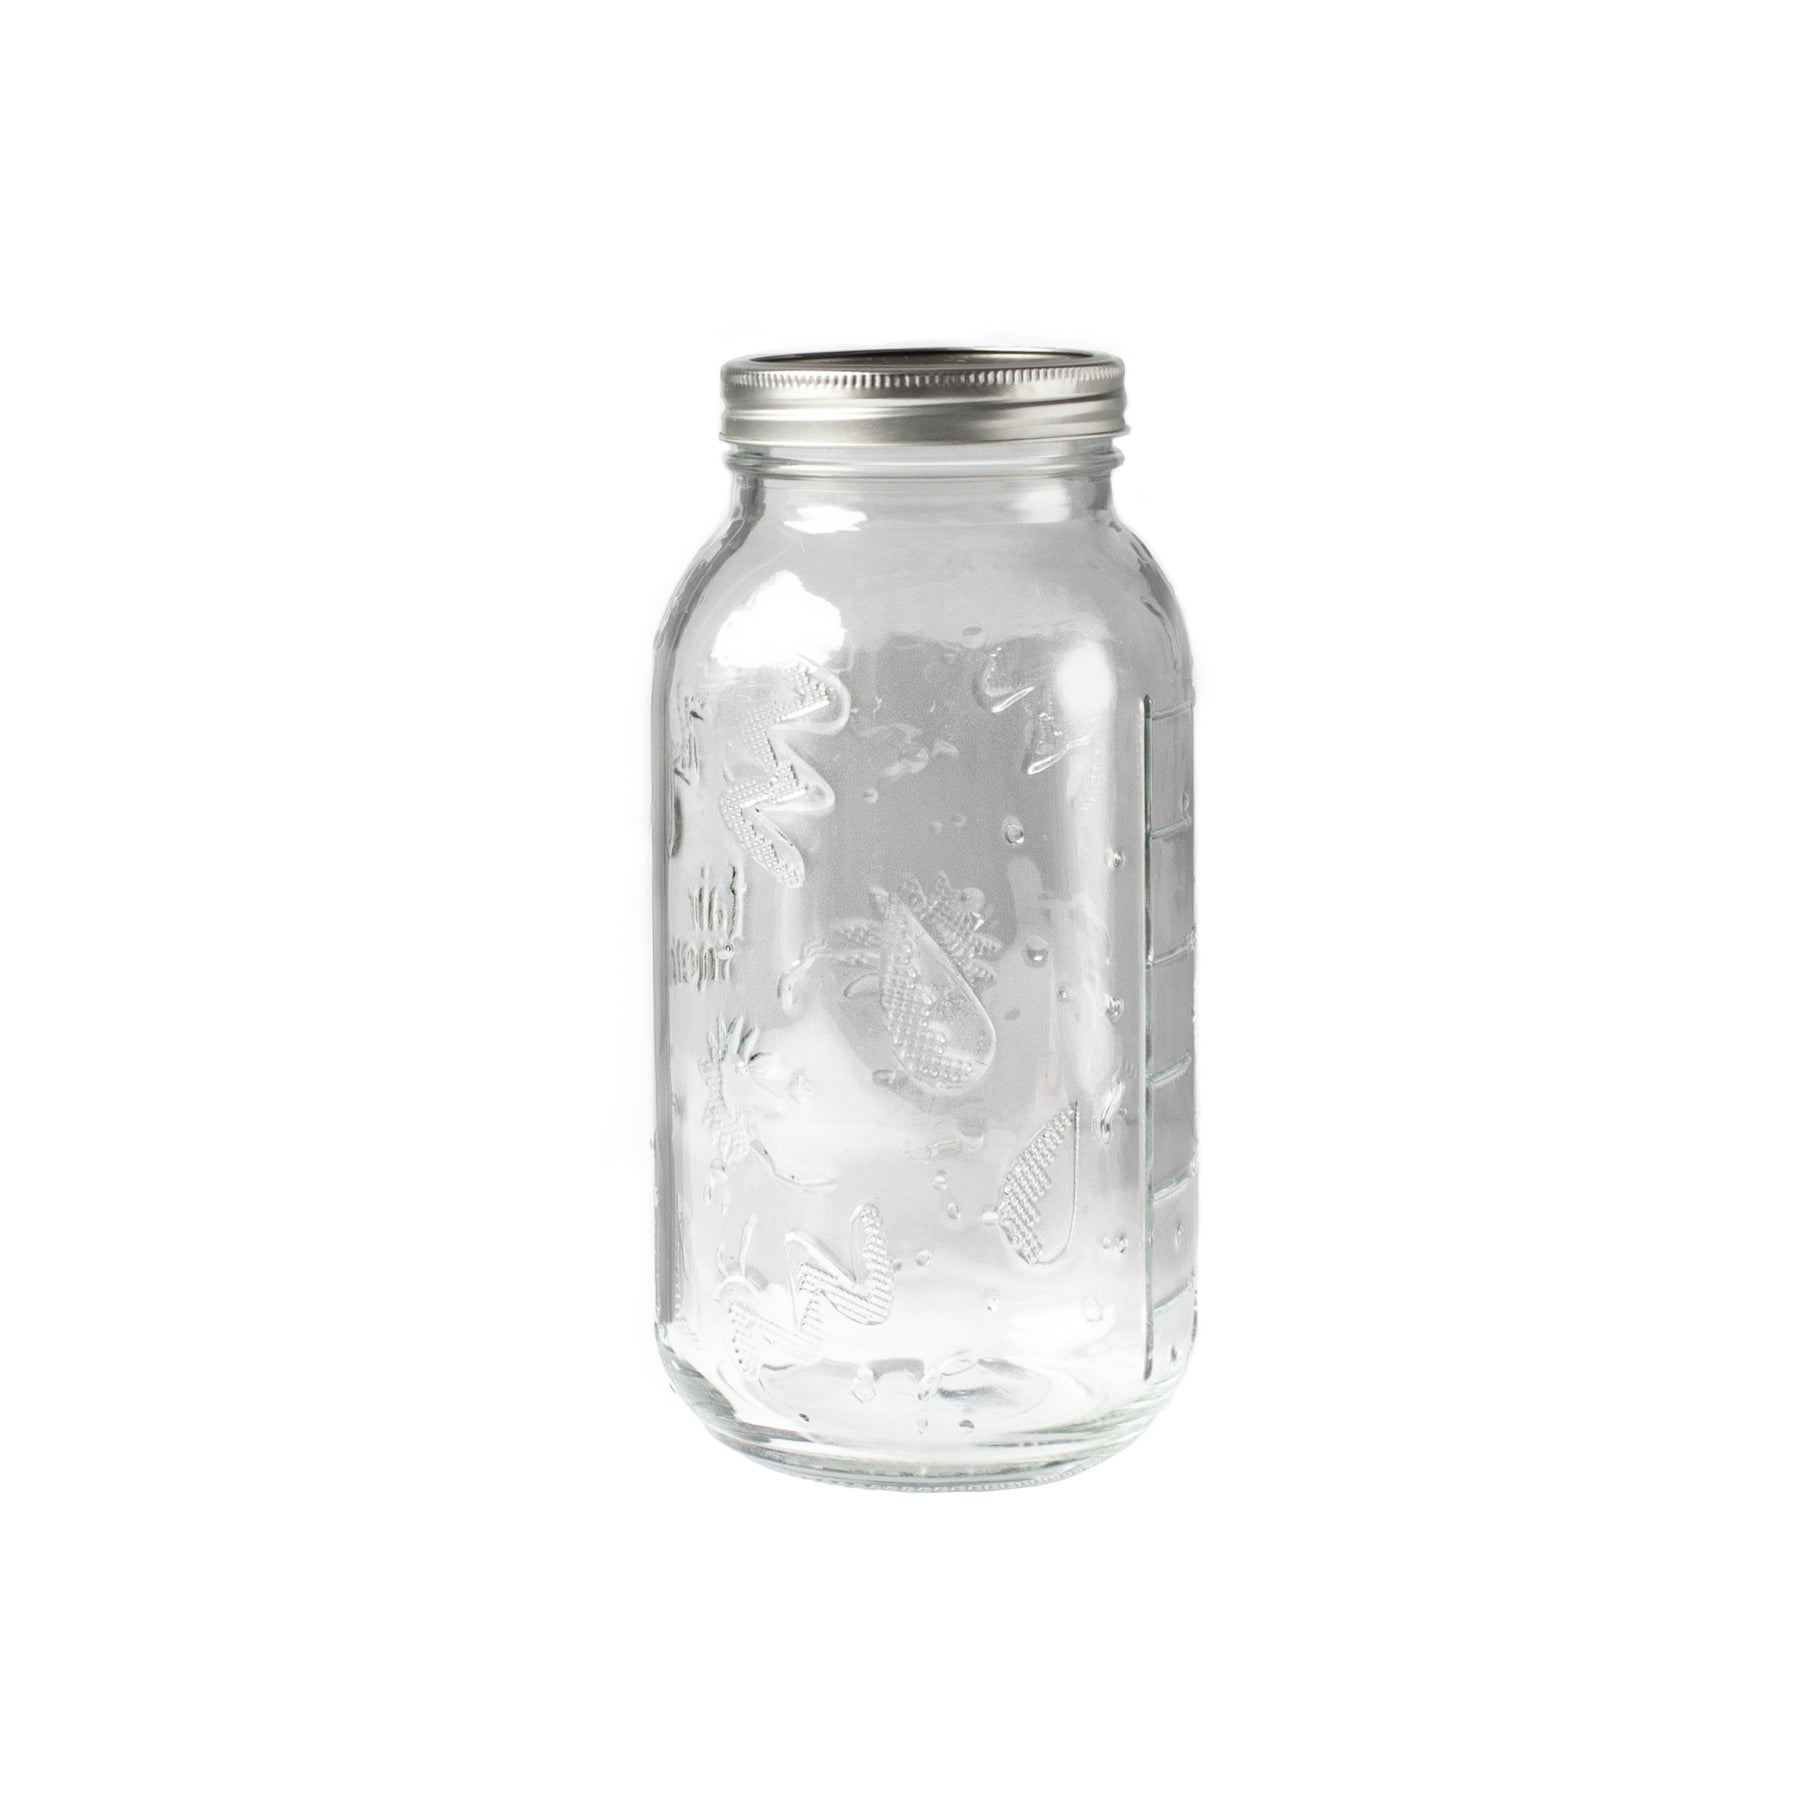 Fermentationsglas (64 oz) I Mason Jar, Einmachglas zum Fermentieren,  Einlegen etc I Rostfrei, lebensmittelecht, spülmaschinenecht I Fairment